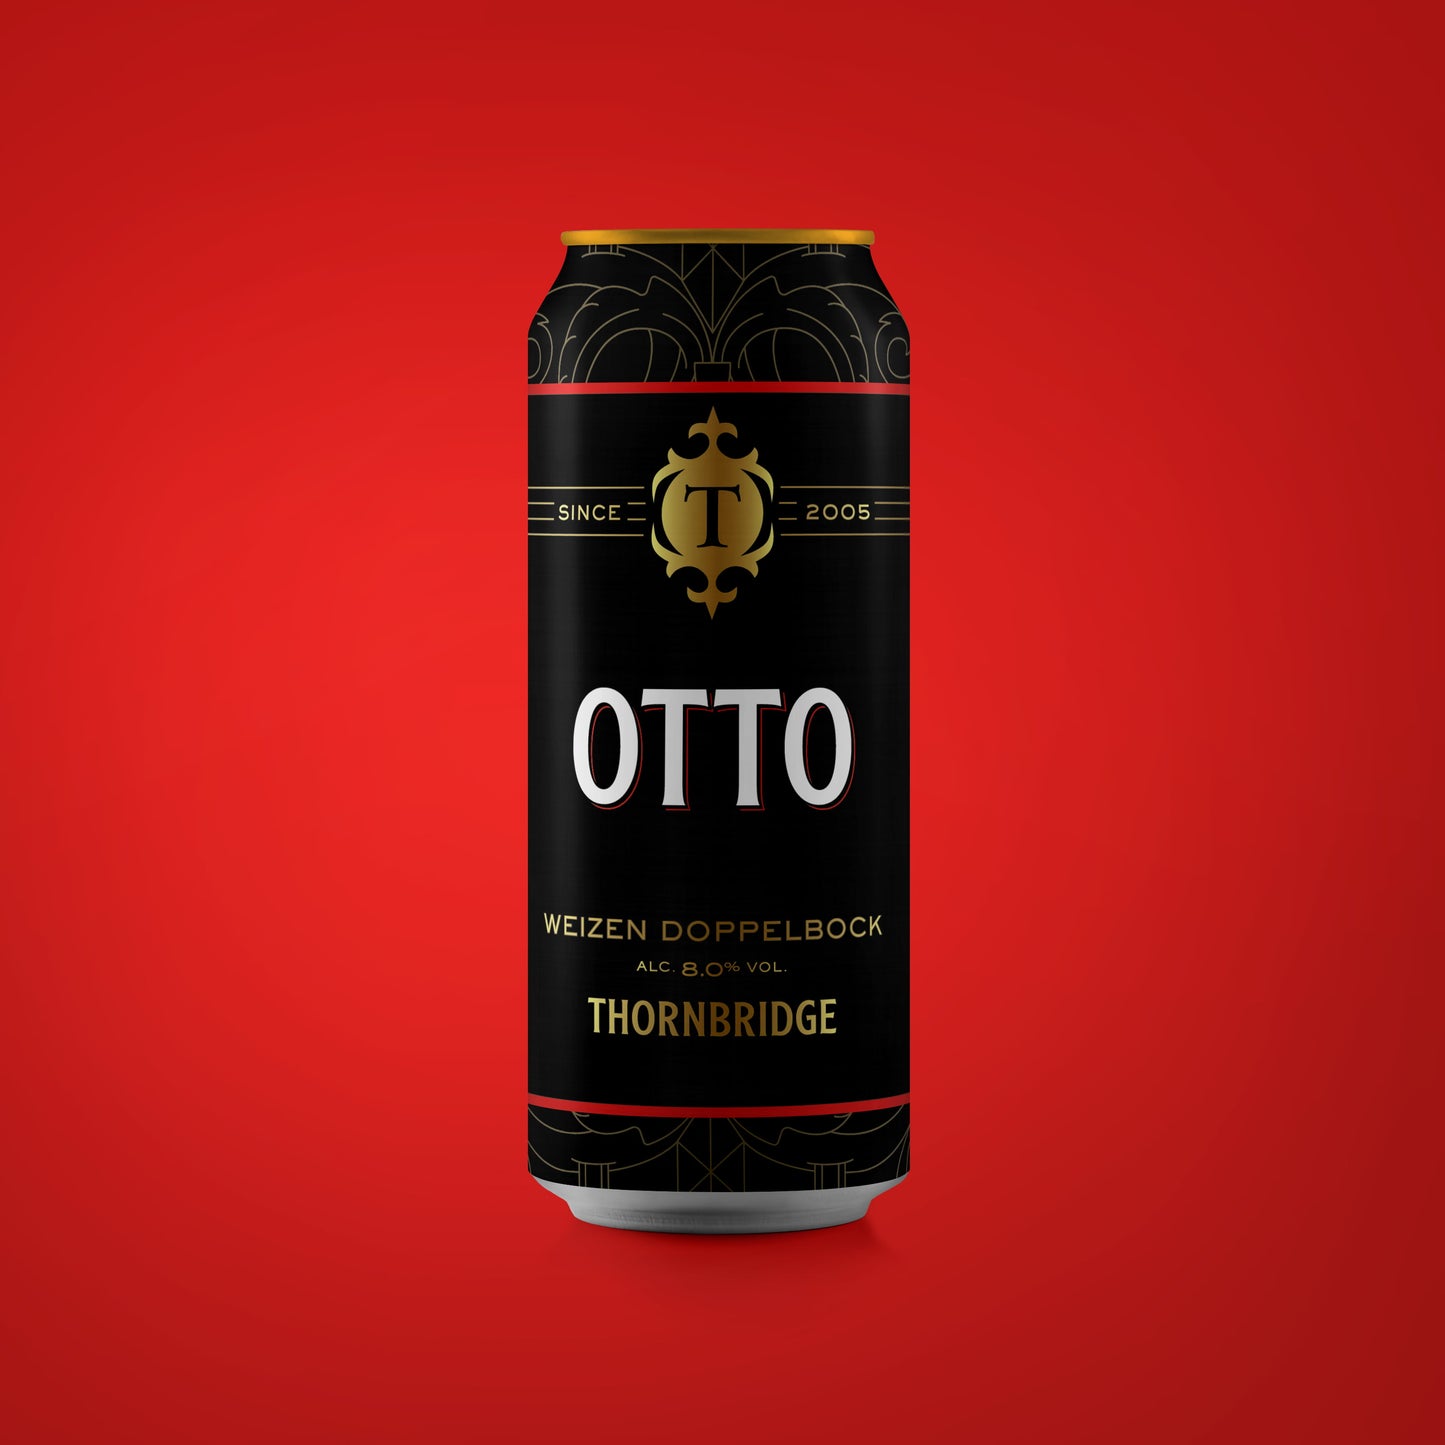 Otto Weizen Doppelbock 8.0% ABV Beer - Single Can Thornbridge